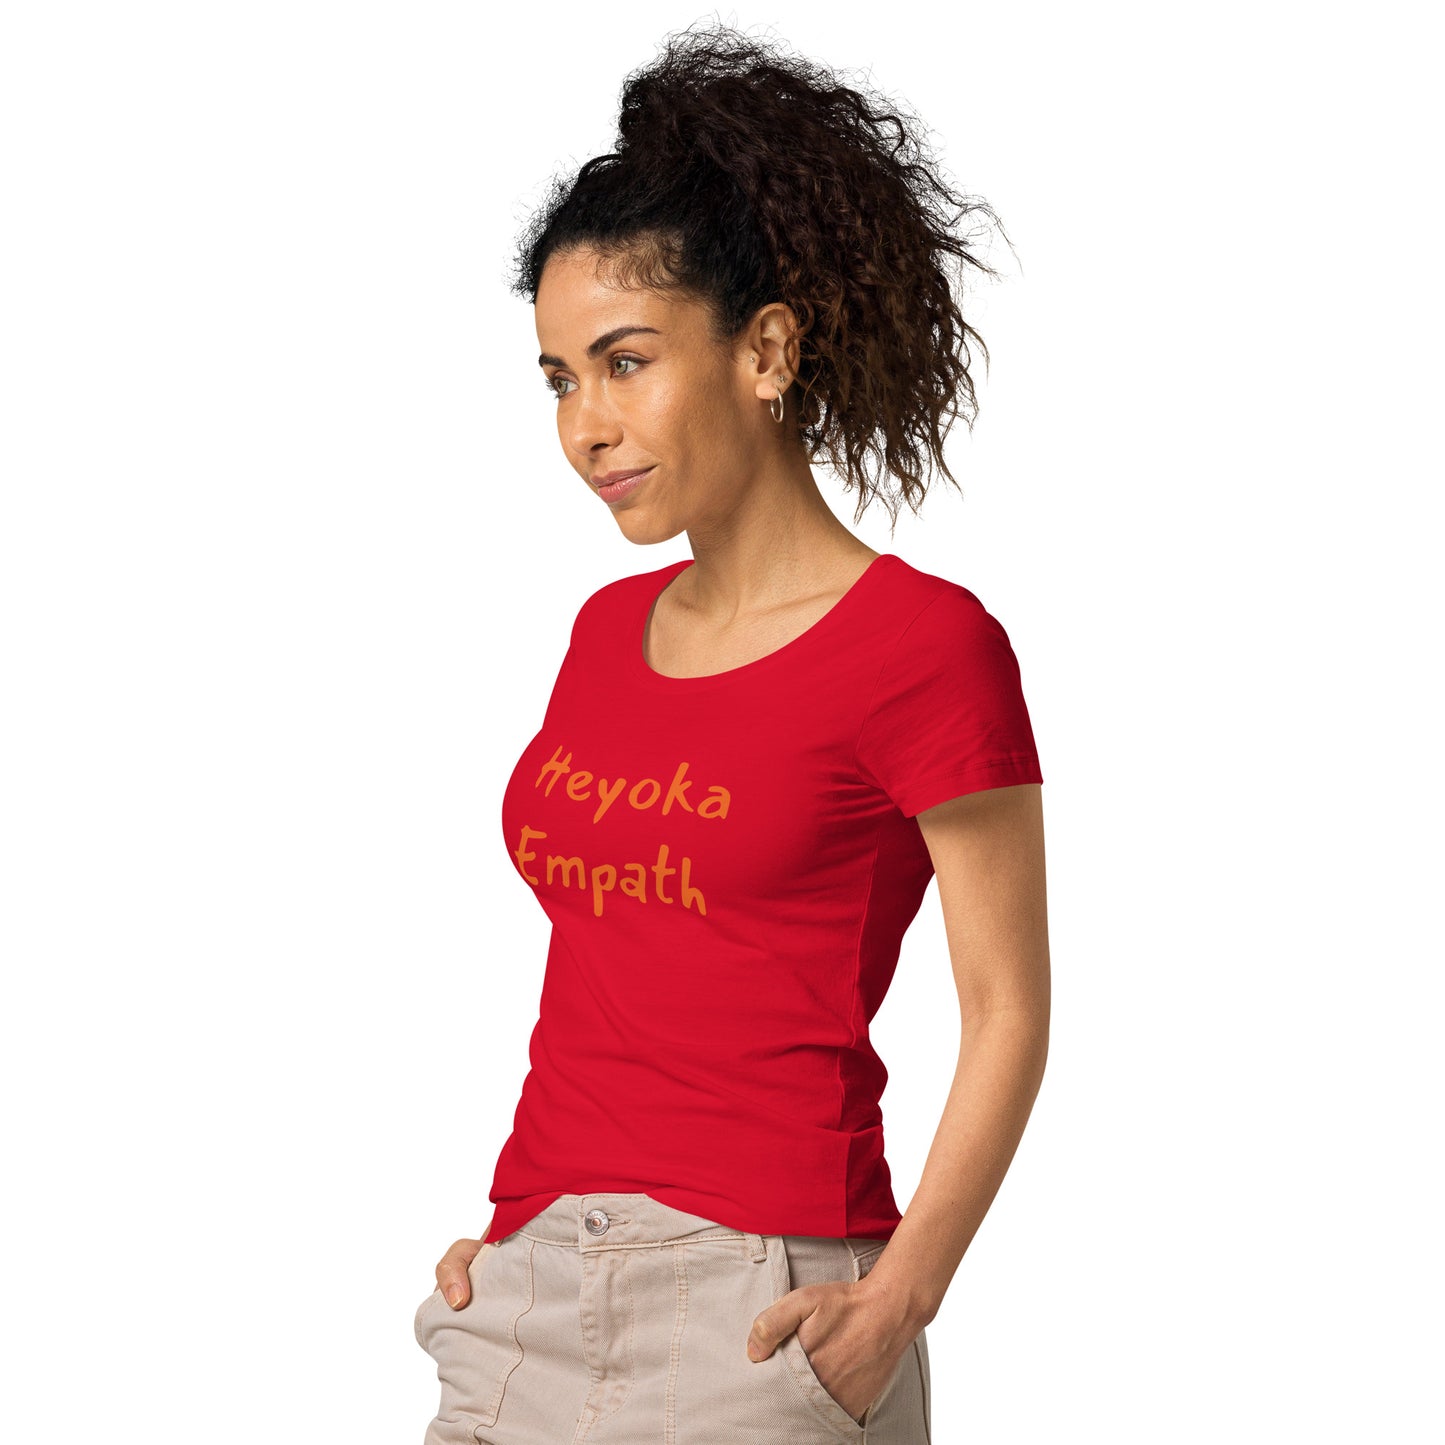 T-shirt bio pour femme - Heyoka Empath